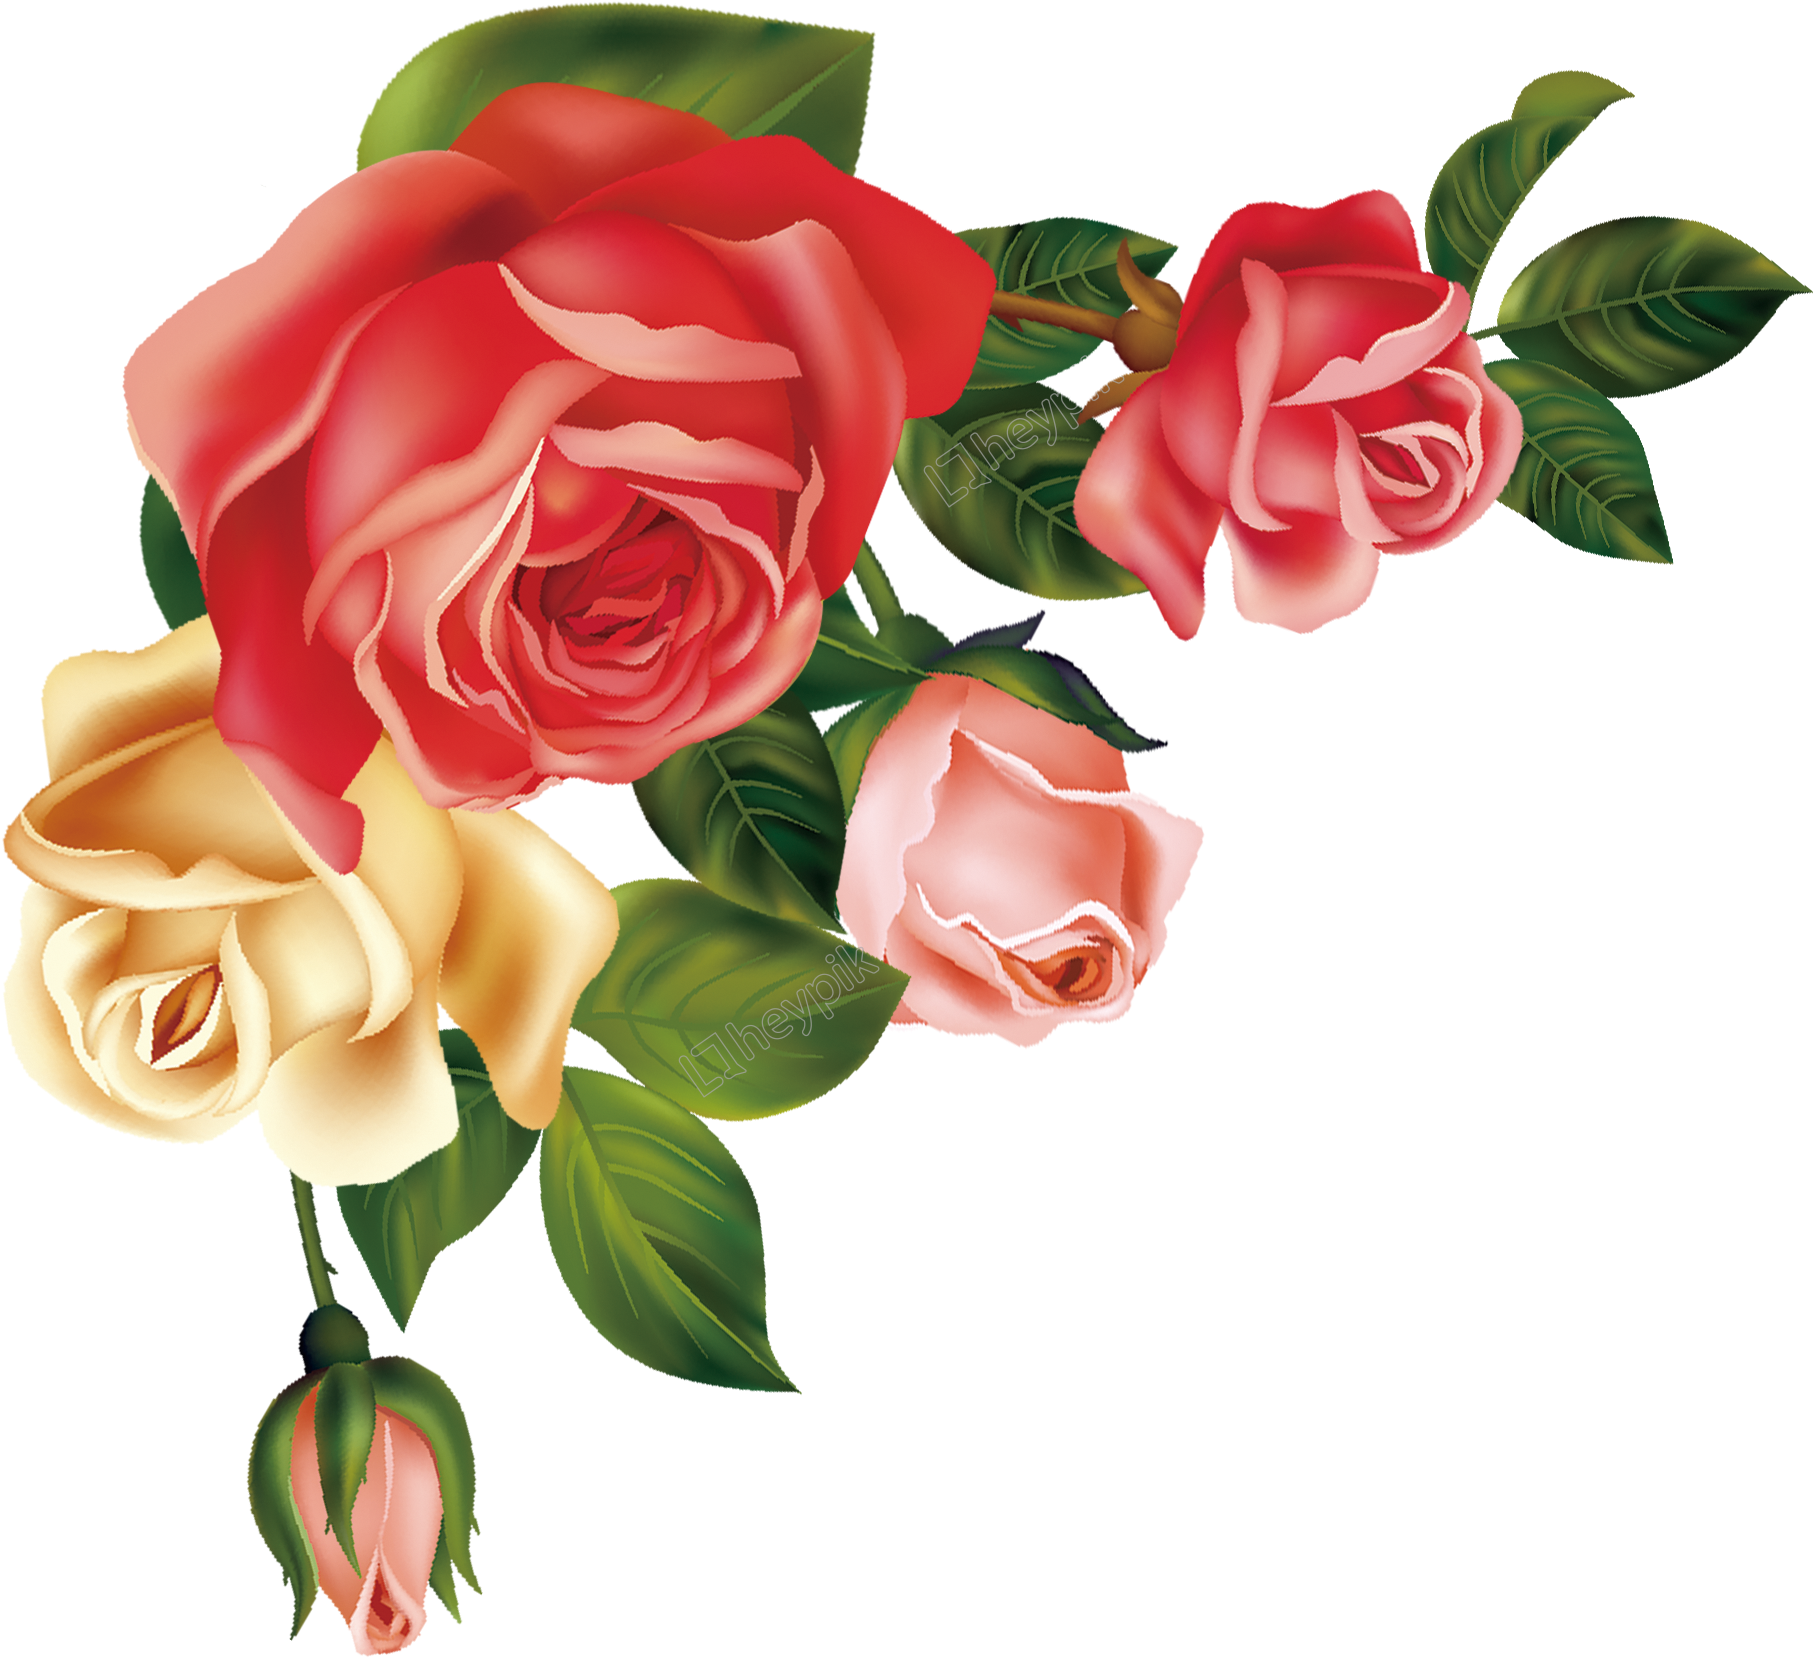 Colorful Rose Vector Illustration PNG image